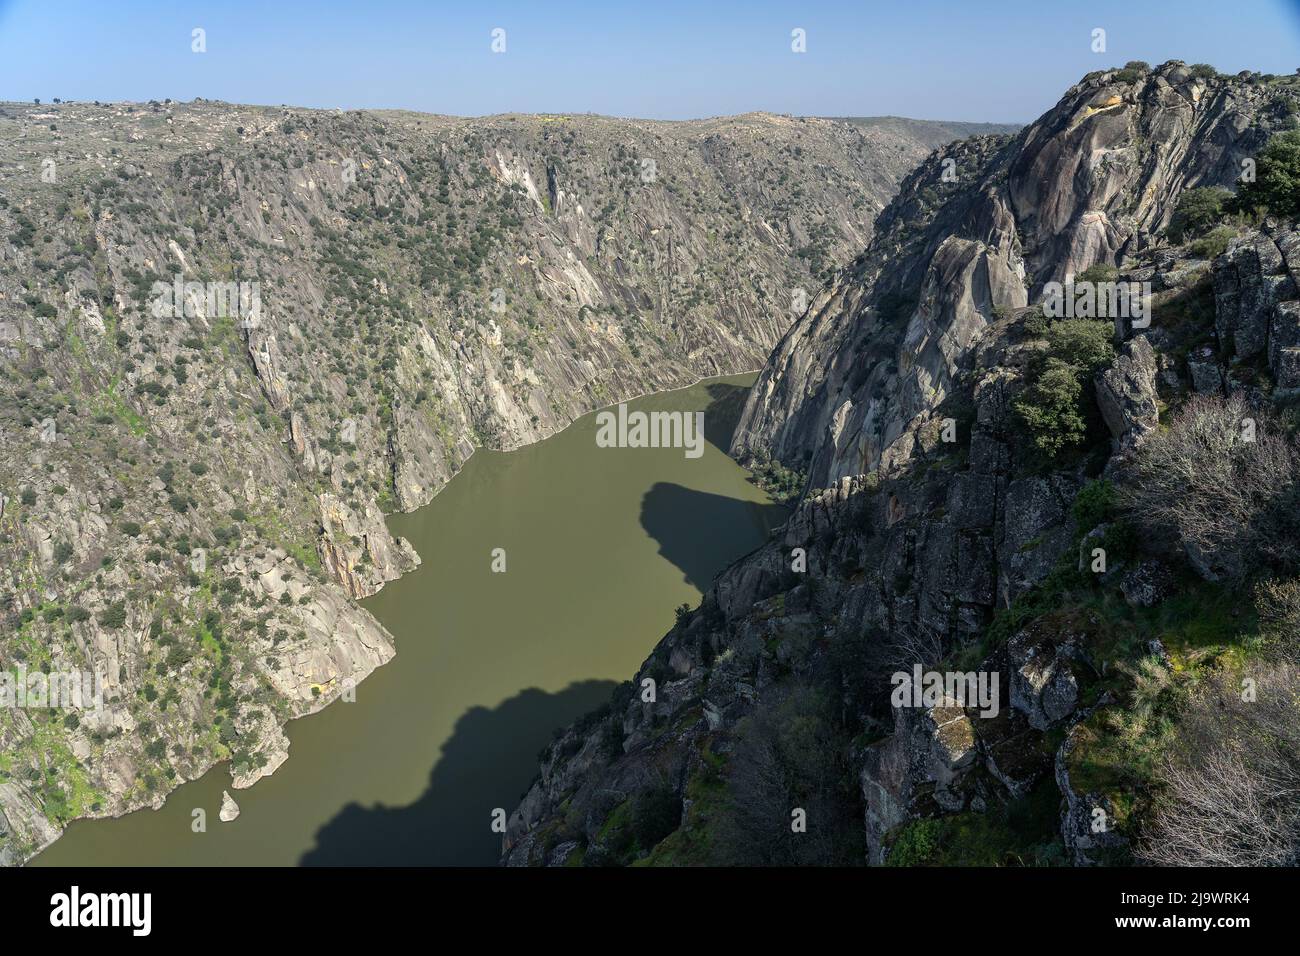 Arribes del Duero (Douro gorges) cliffs in Salamanca. Stock Photo